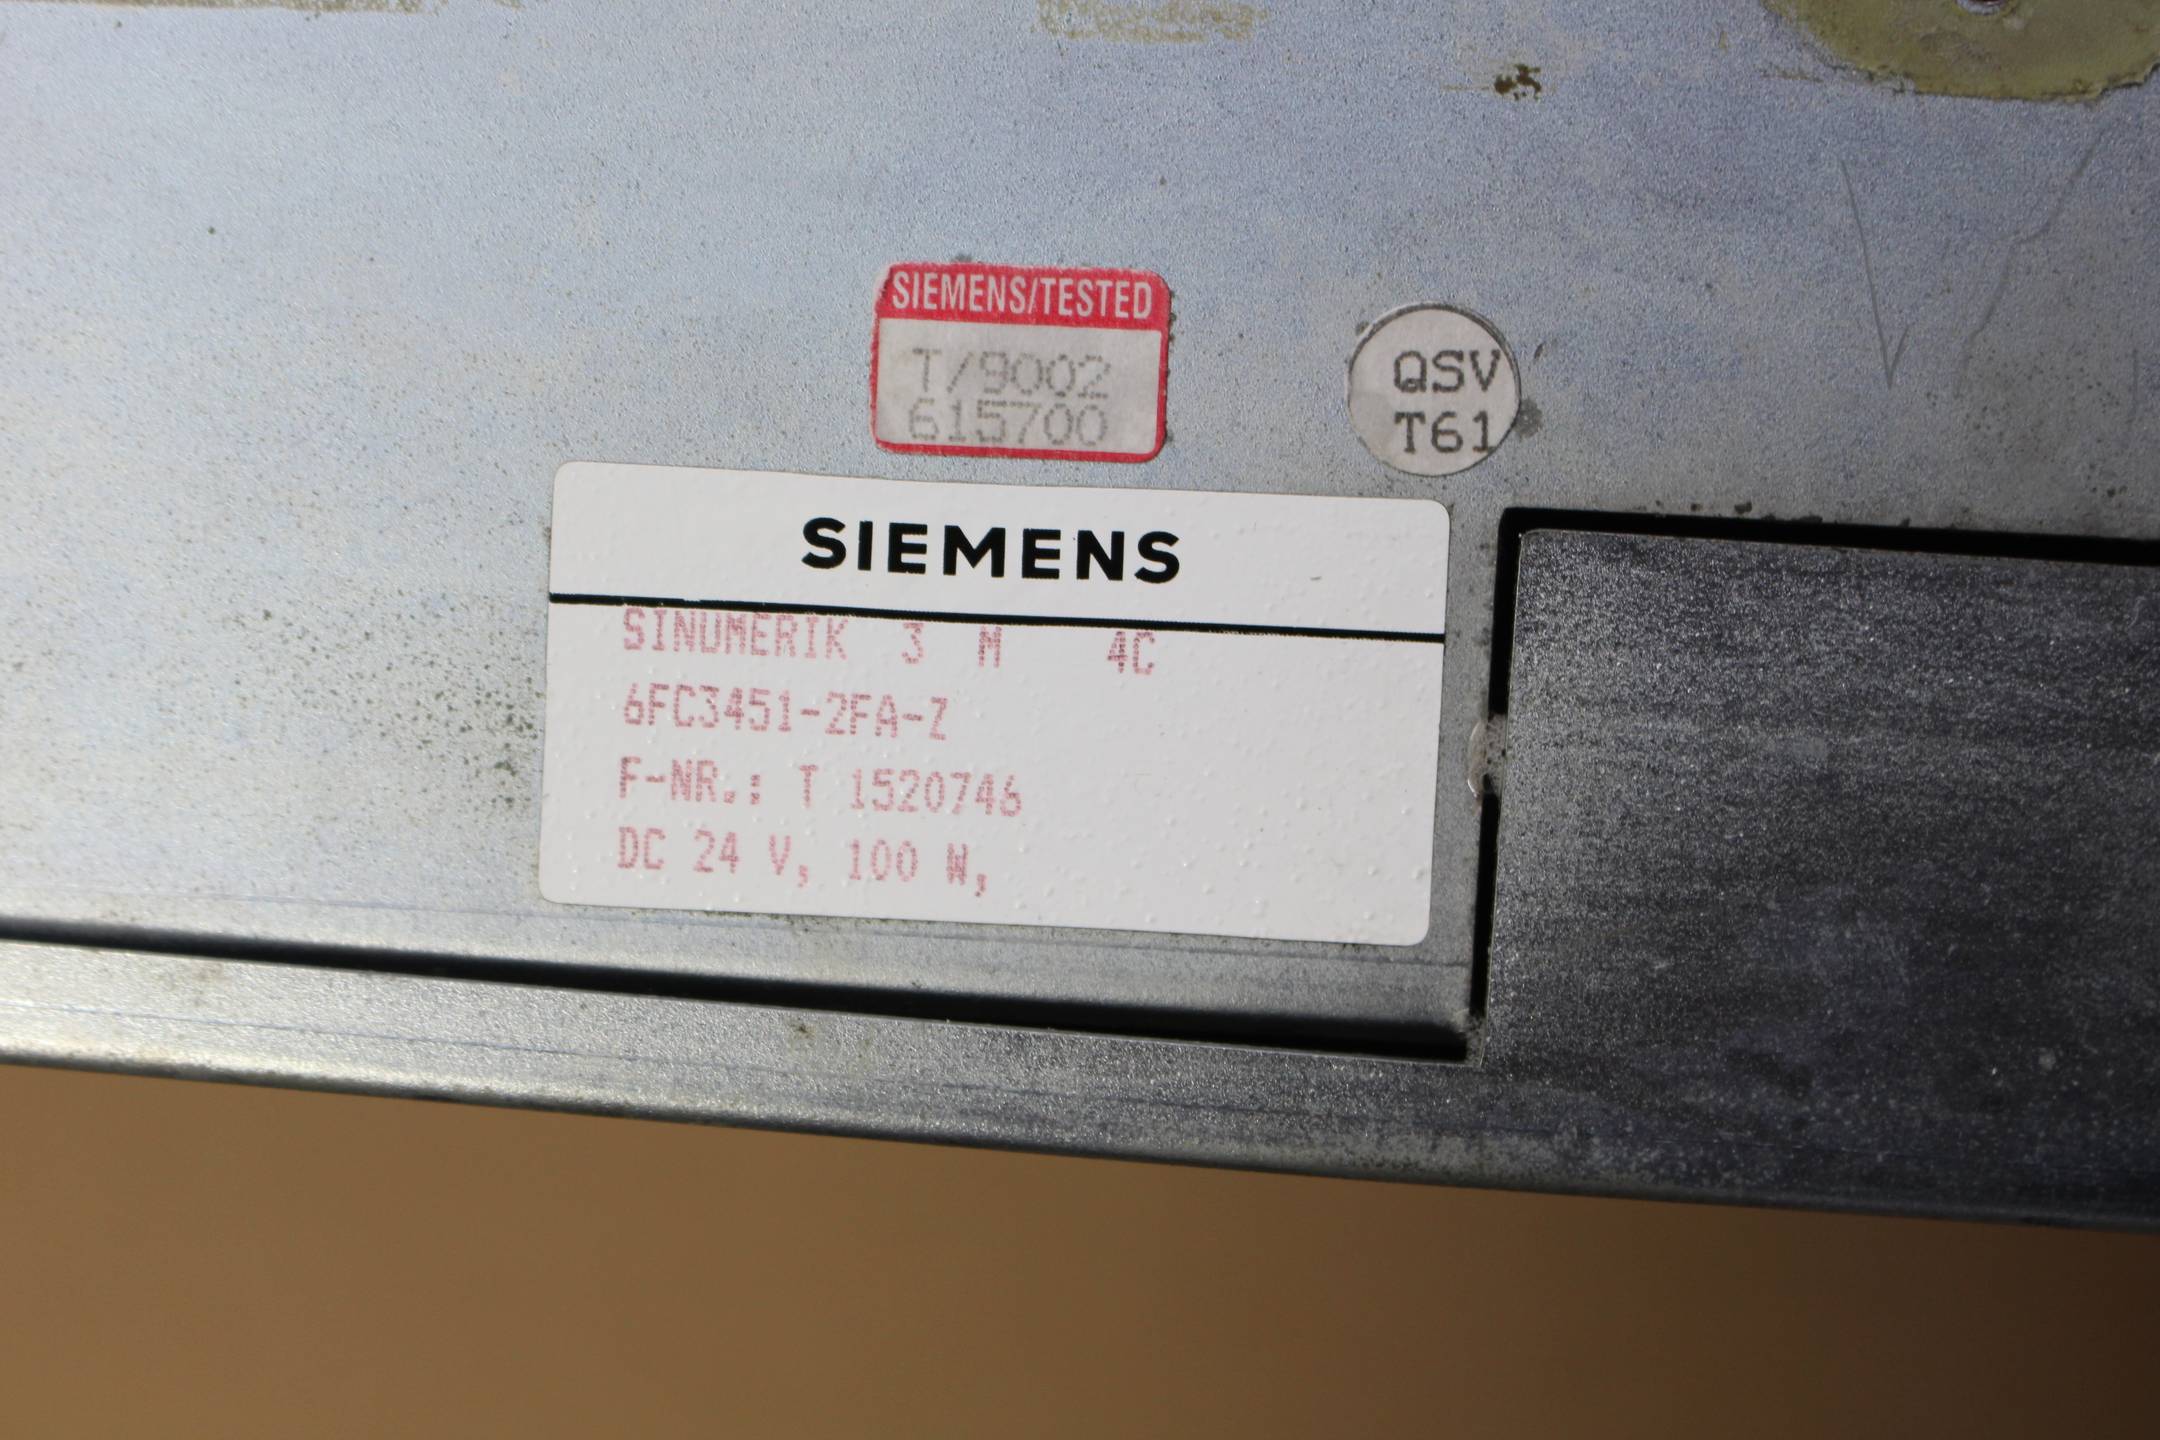 Siemens sinumerik 3 M 4C Rack 6FC3451-2FA-Z ( 6FC3 451-2FA-Z )